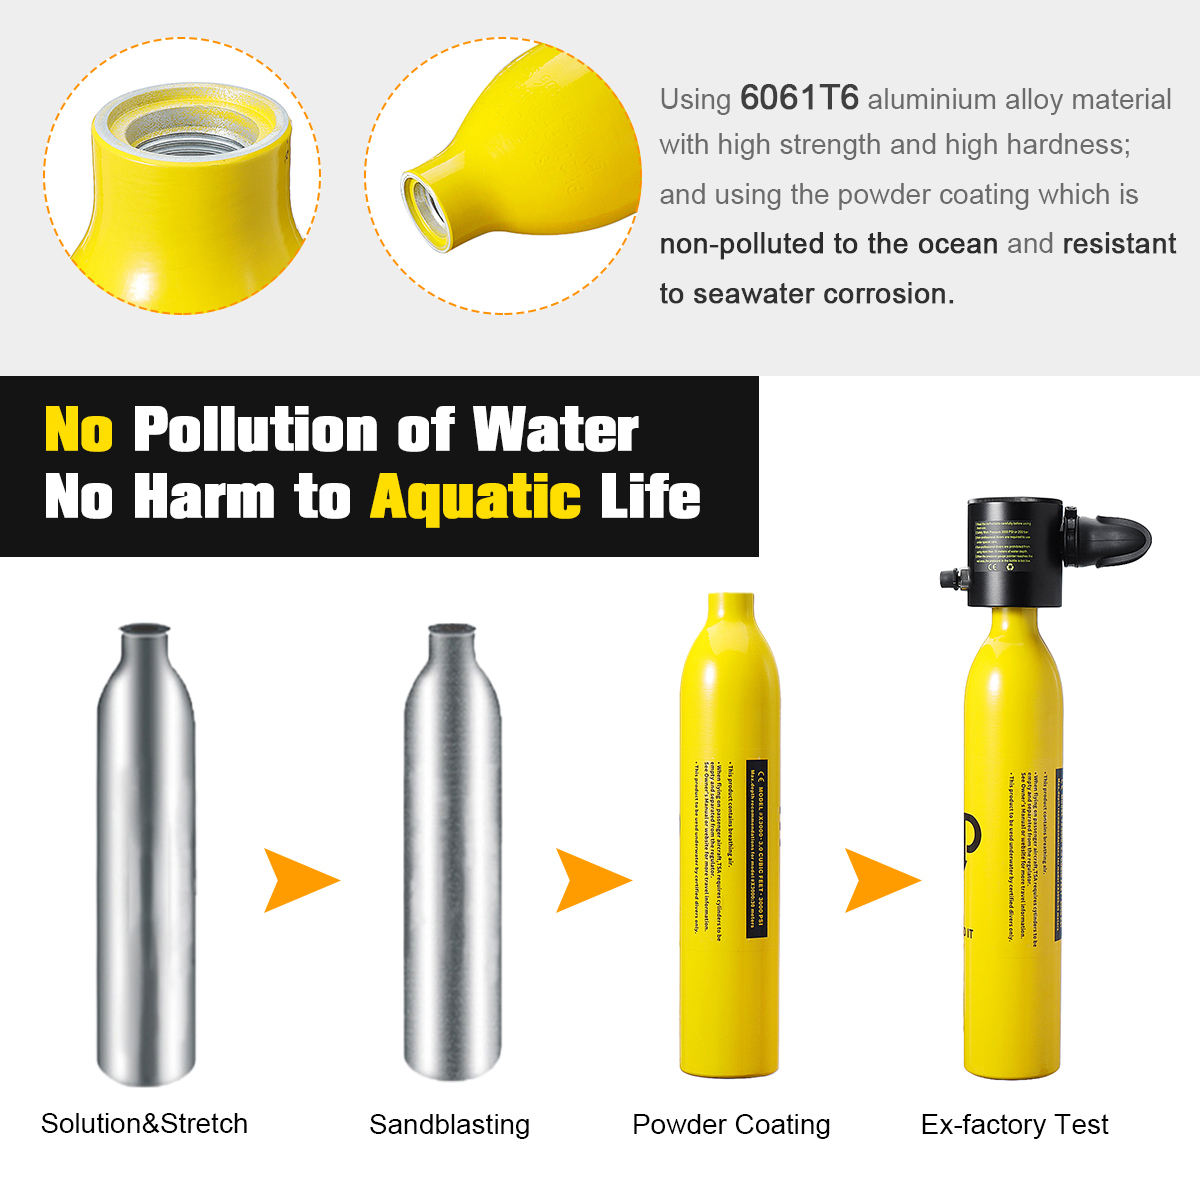 DIDEEP-Diving-Mini-Scuba-Cylinder-Oxygen-Tank-Underwater-Breath-Set-Yellow-1619539